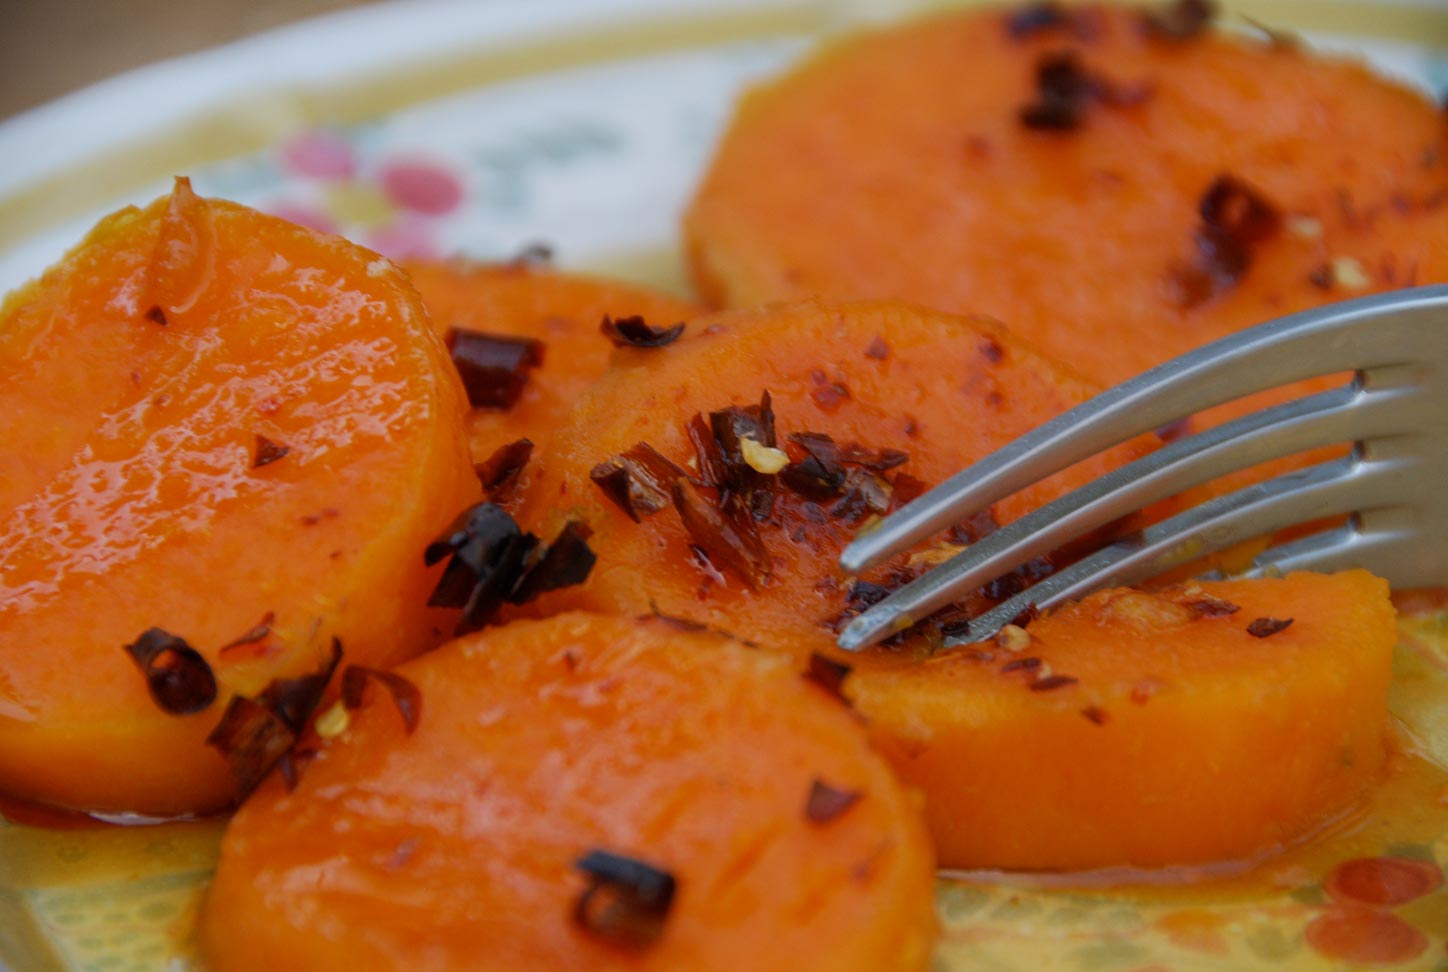 Pati Jinich sweet potatoes with chile de arbol